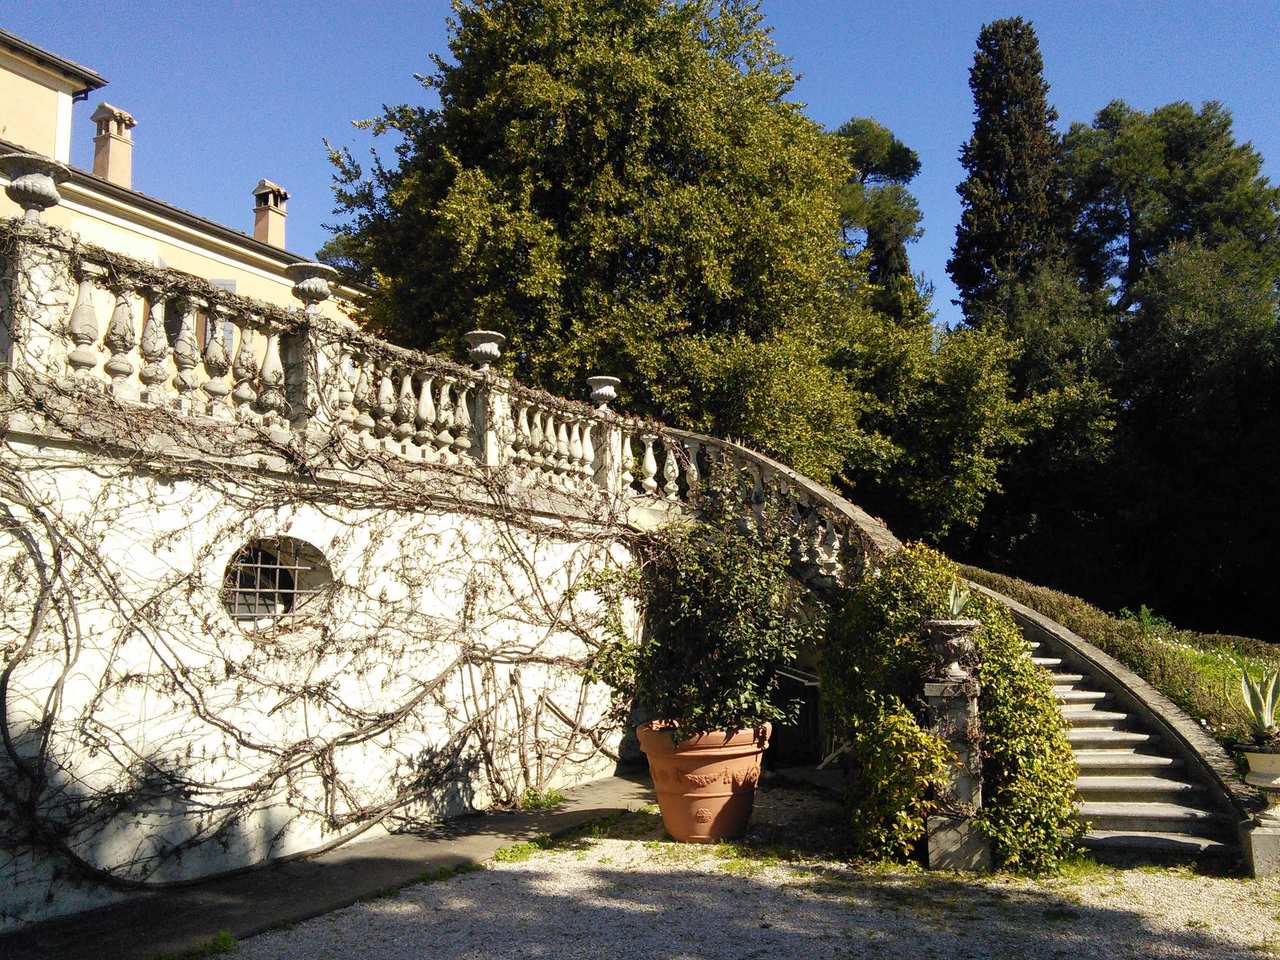 Se vende villa in zona tranquila Rimini Emilia-Romagna